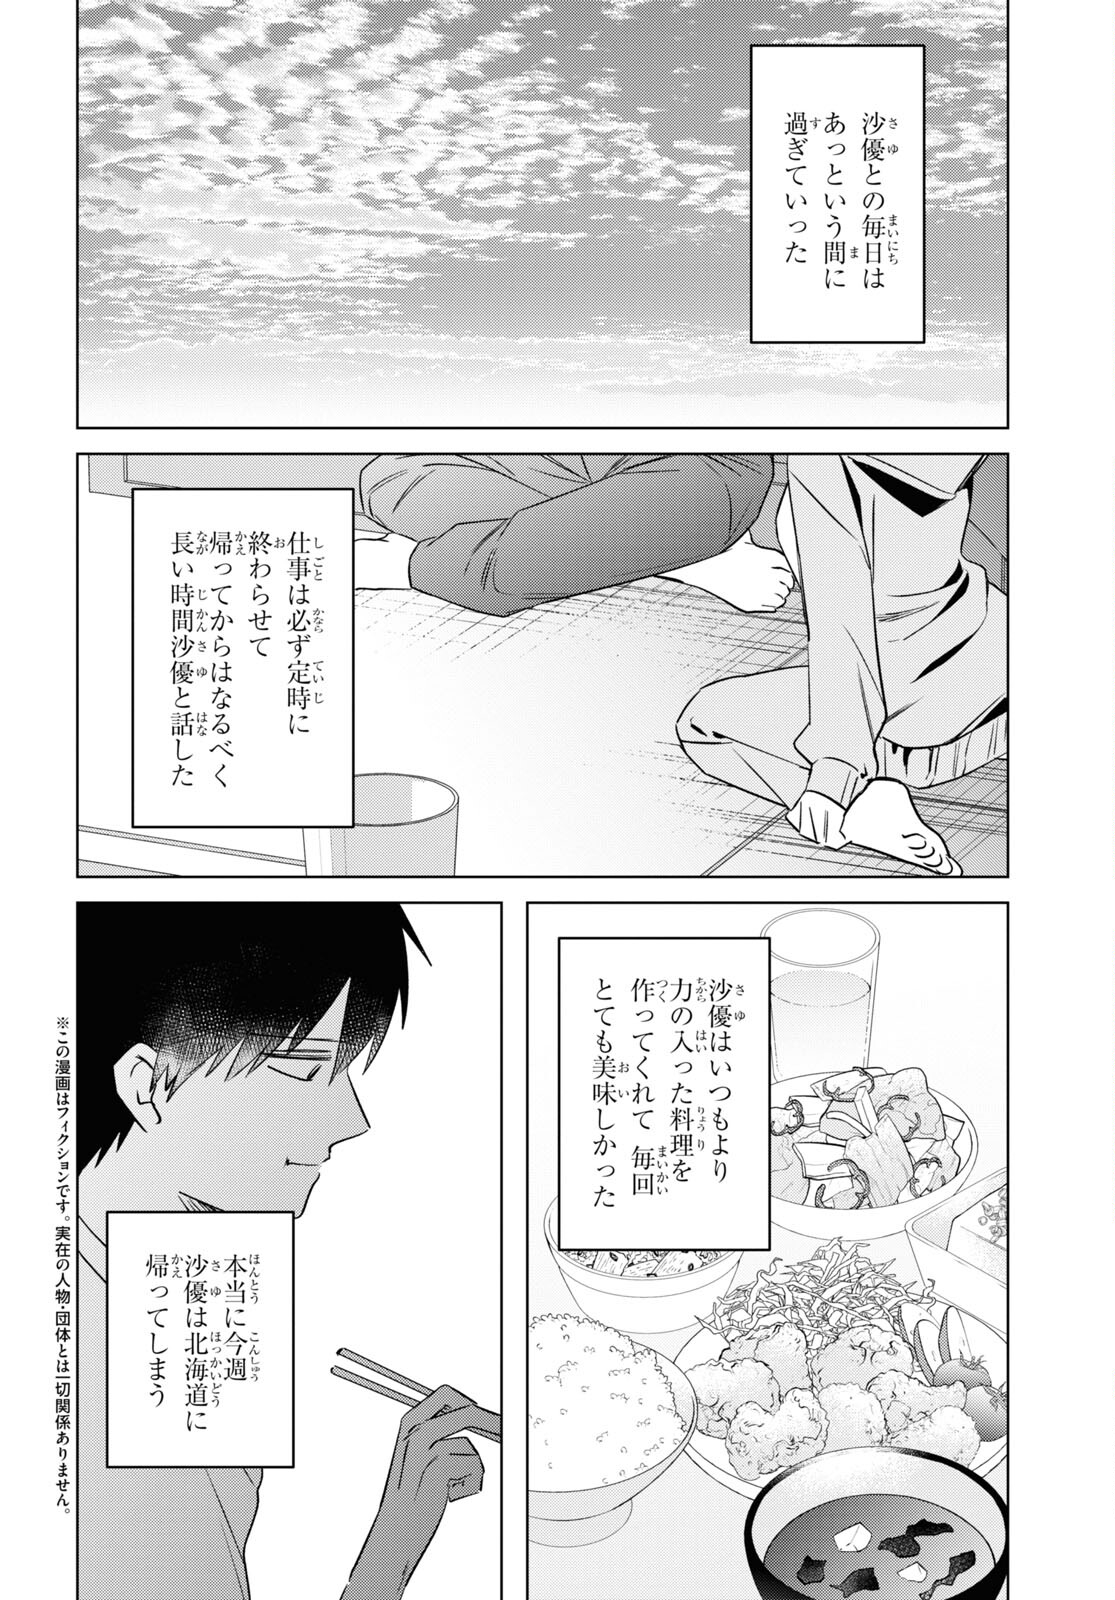 Hige wo Soru. Soshite Joshikousei wo Hirou. - Chapter 54 - Page 2